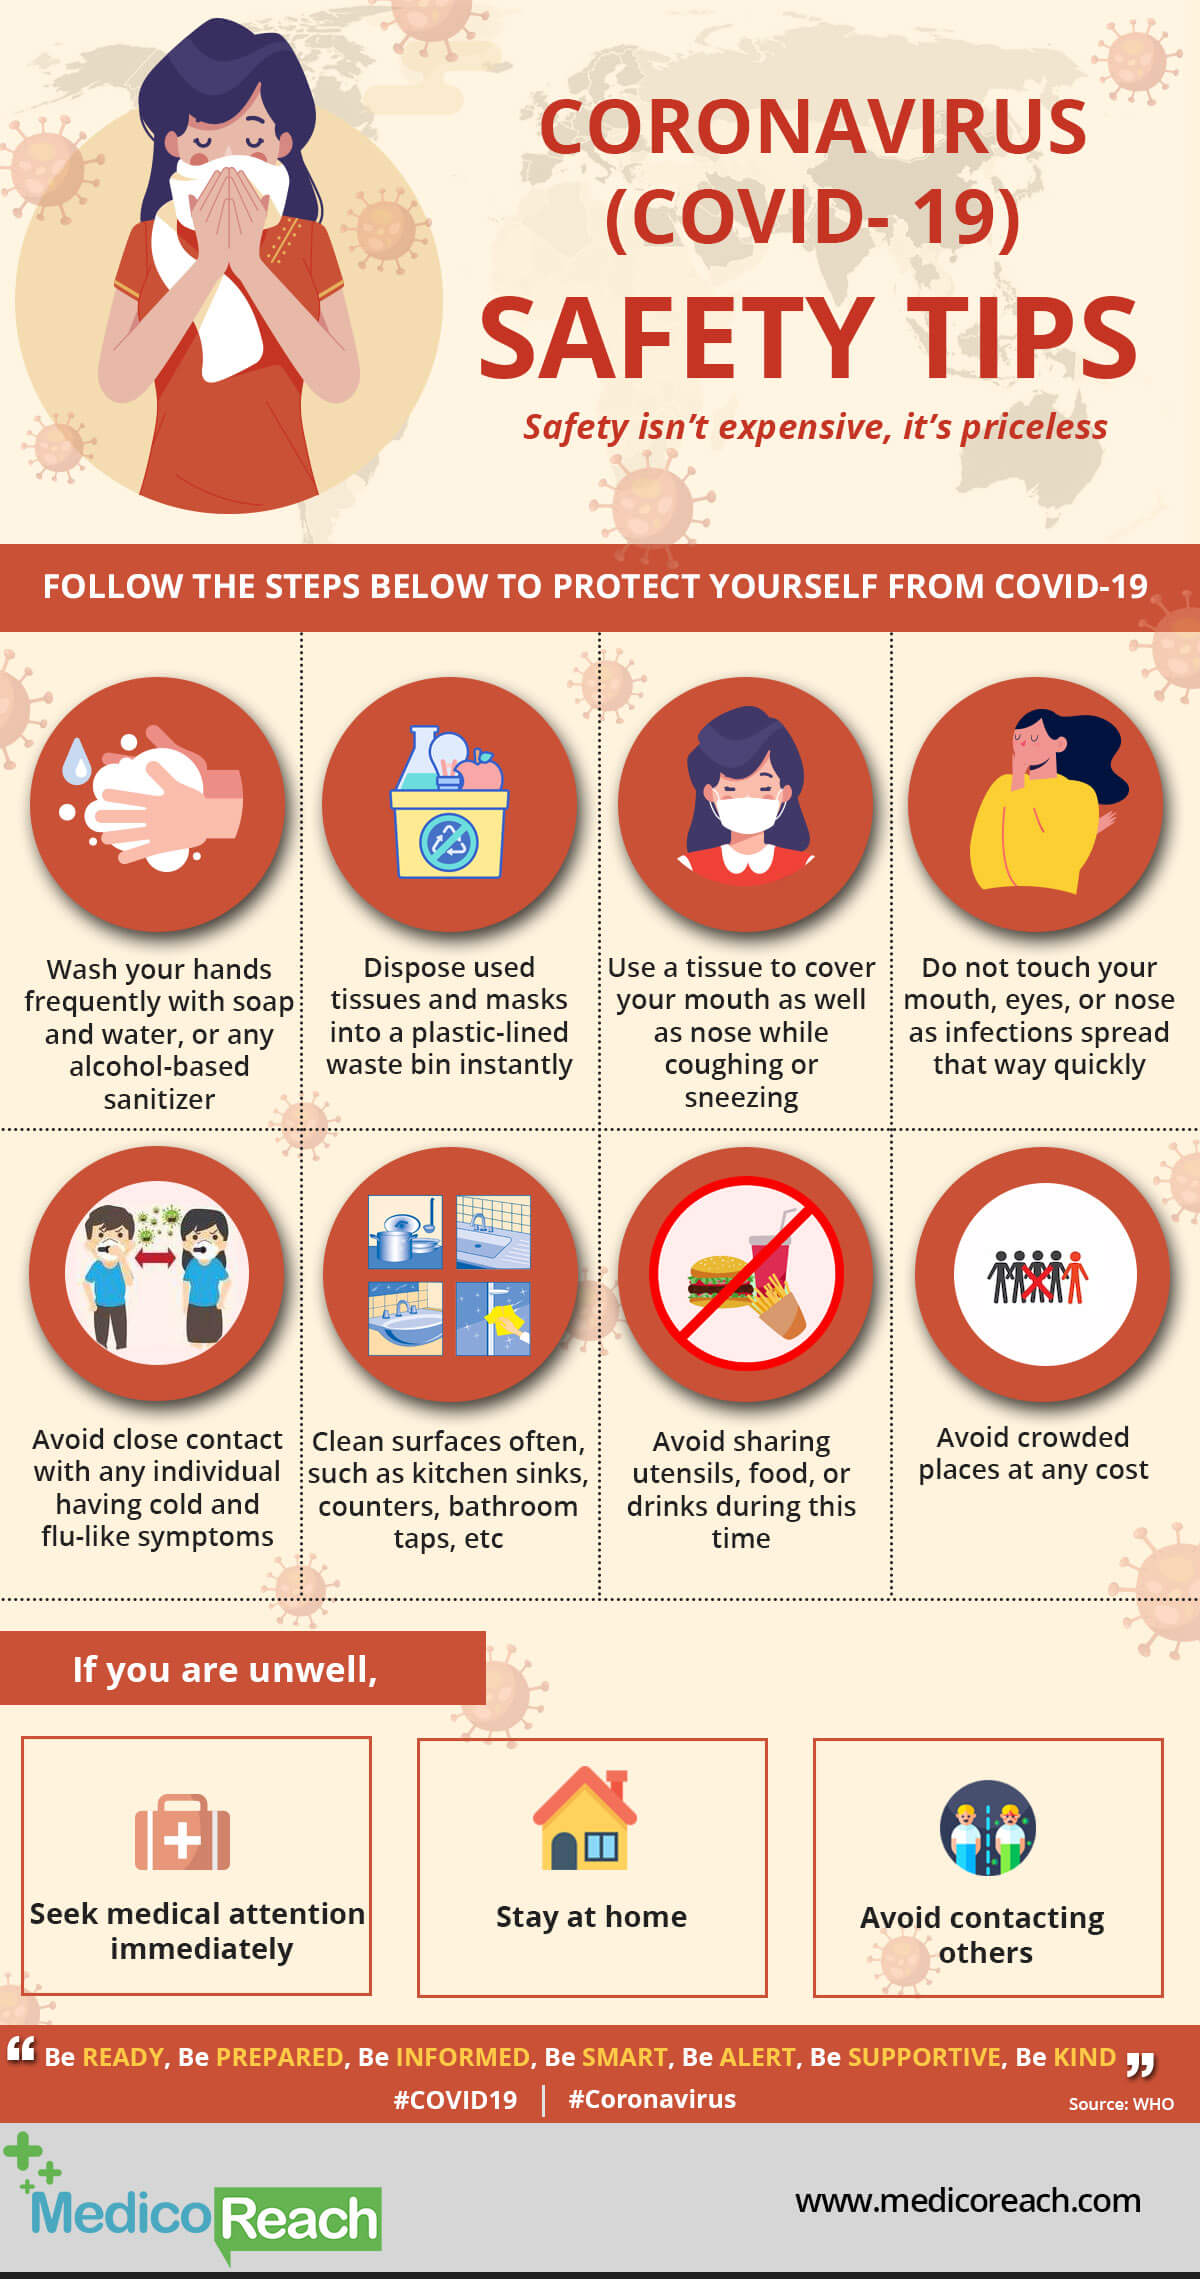 Coronavirus Safety Tips (COVID-19) - Medicoreach